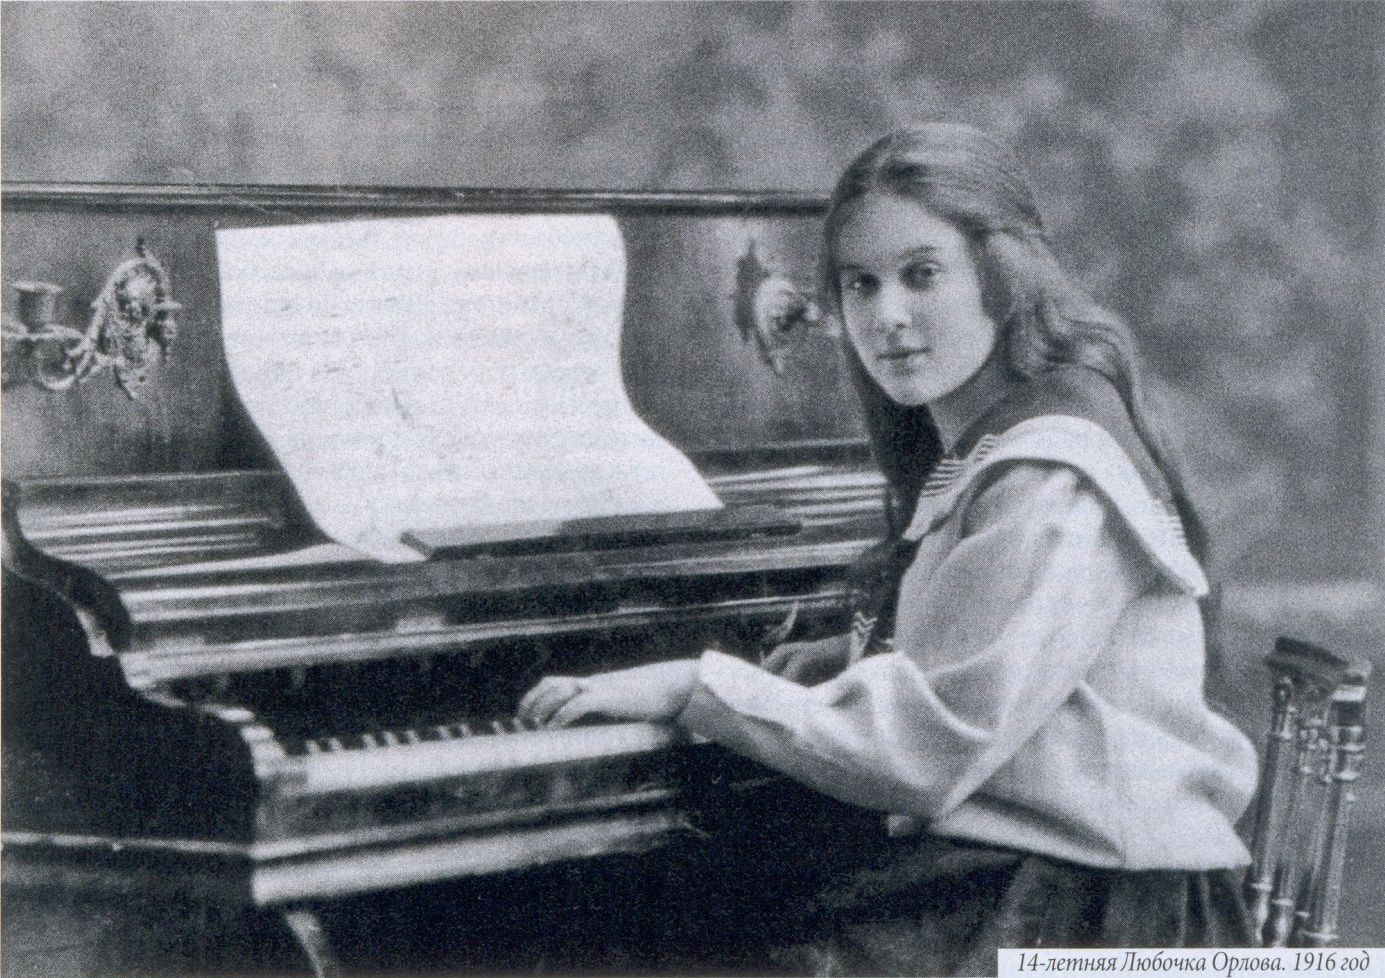 14-летняя Любочка Орлова. 1916 год